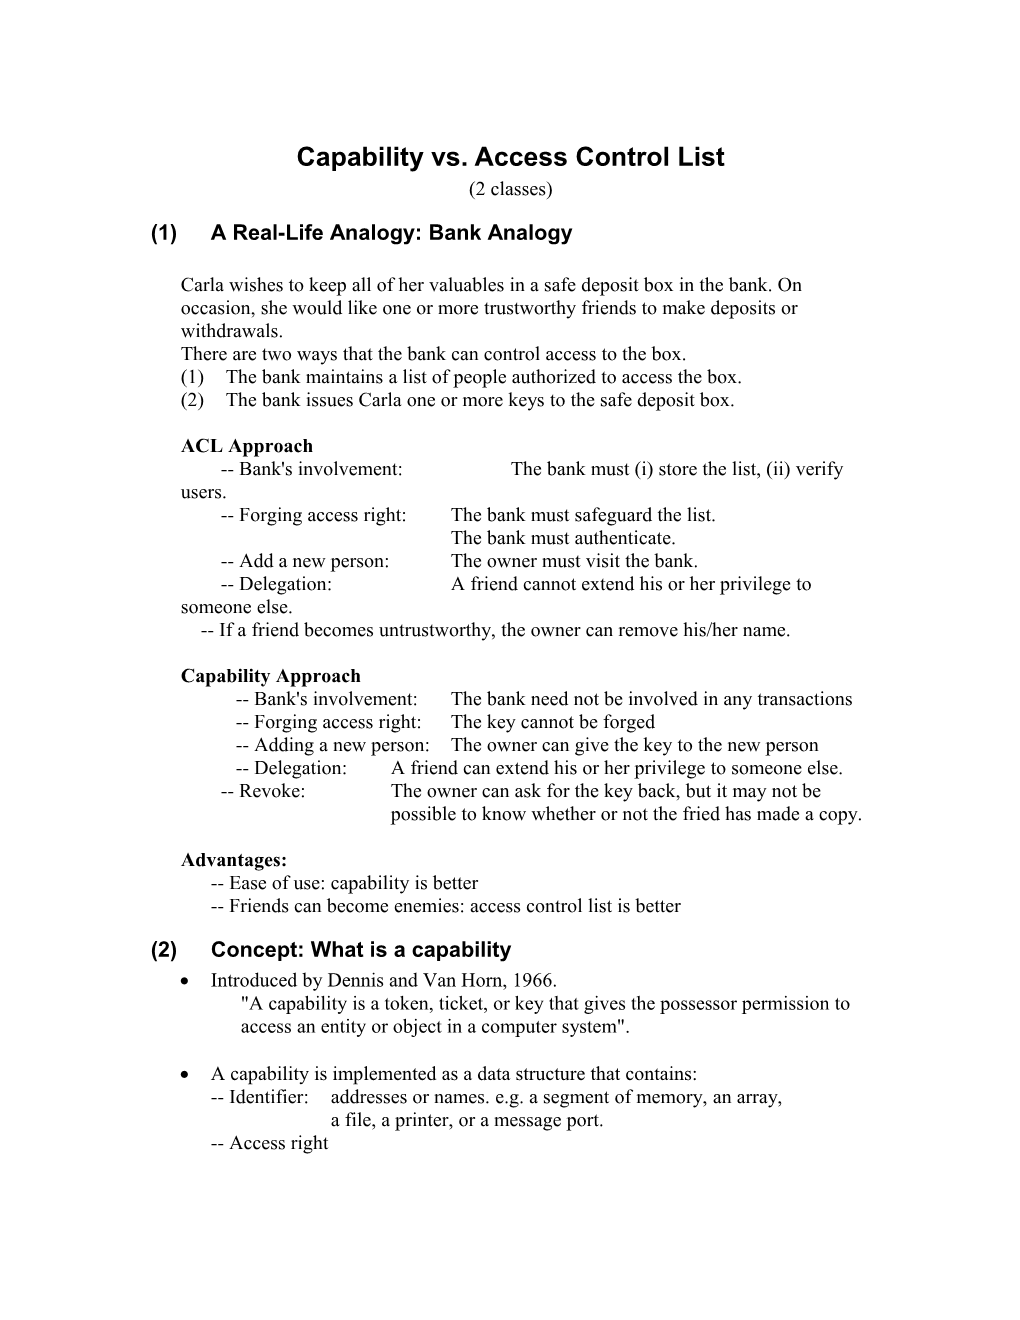 Capability Vs. Access Control List